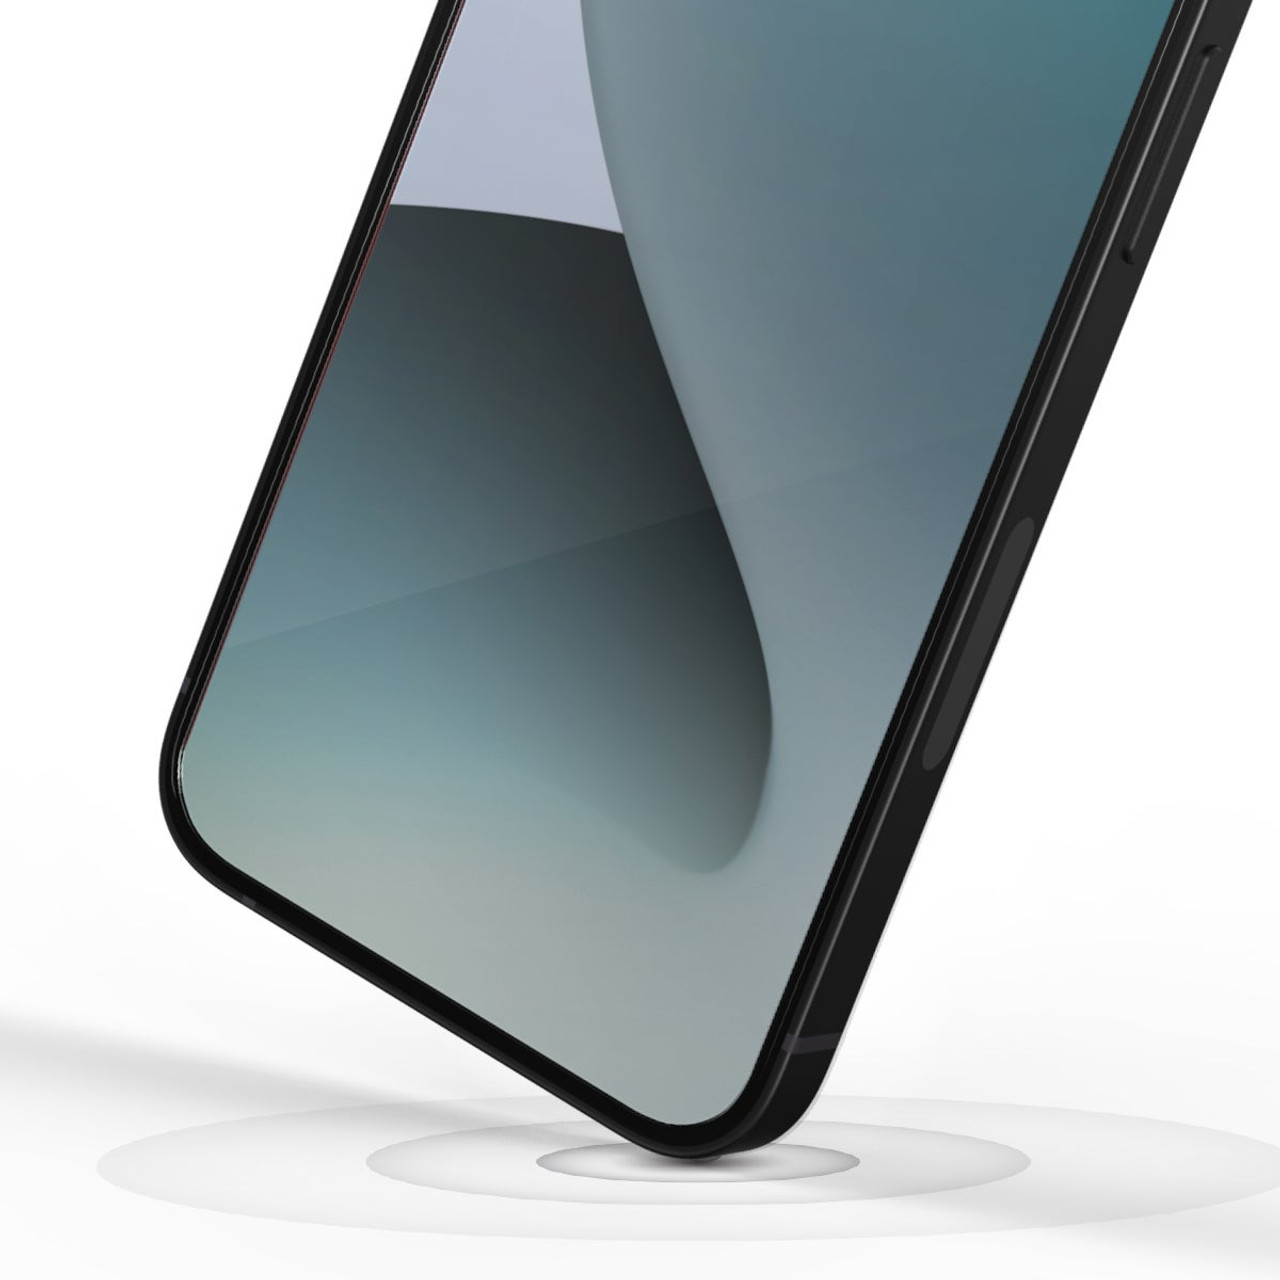 Case Benks Para iPhone 12 Mini 5.4 Protector 360° Full Glass